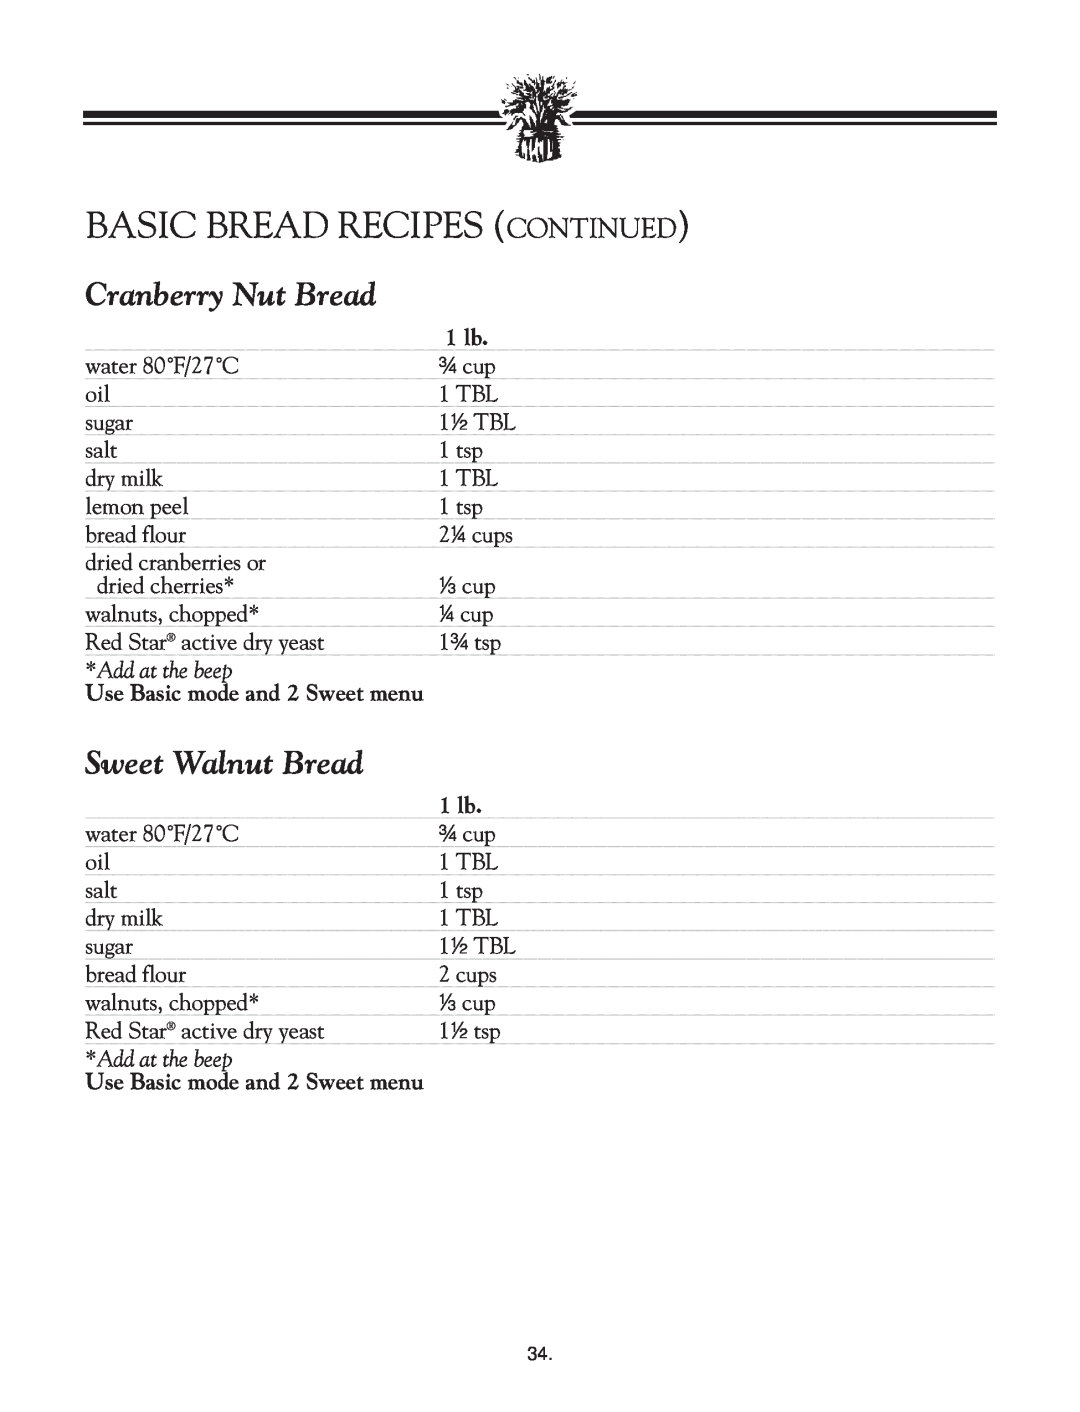 Breadman TR2828G instruction manual Cranberry Nut Bread, Sweet Walnut Bread, Basic Bread Recipes Continued, Add at the beep 